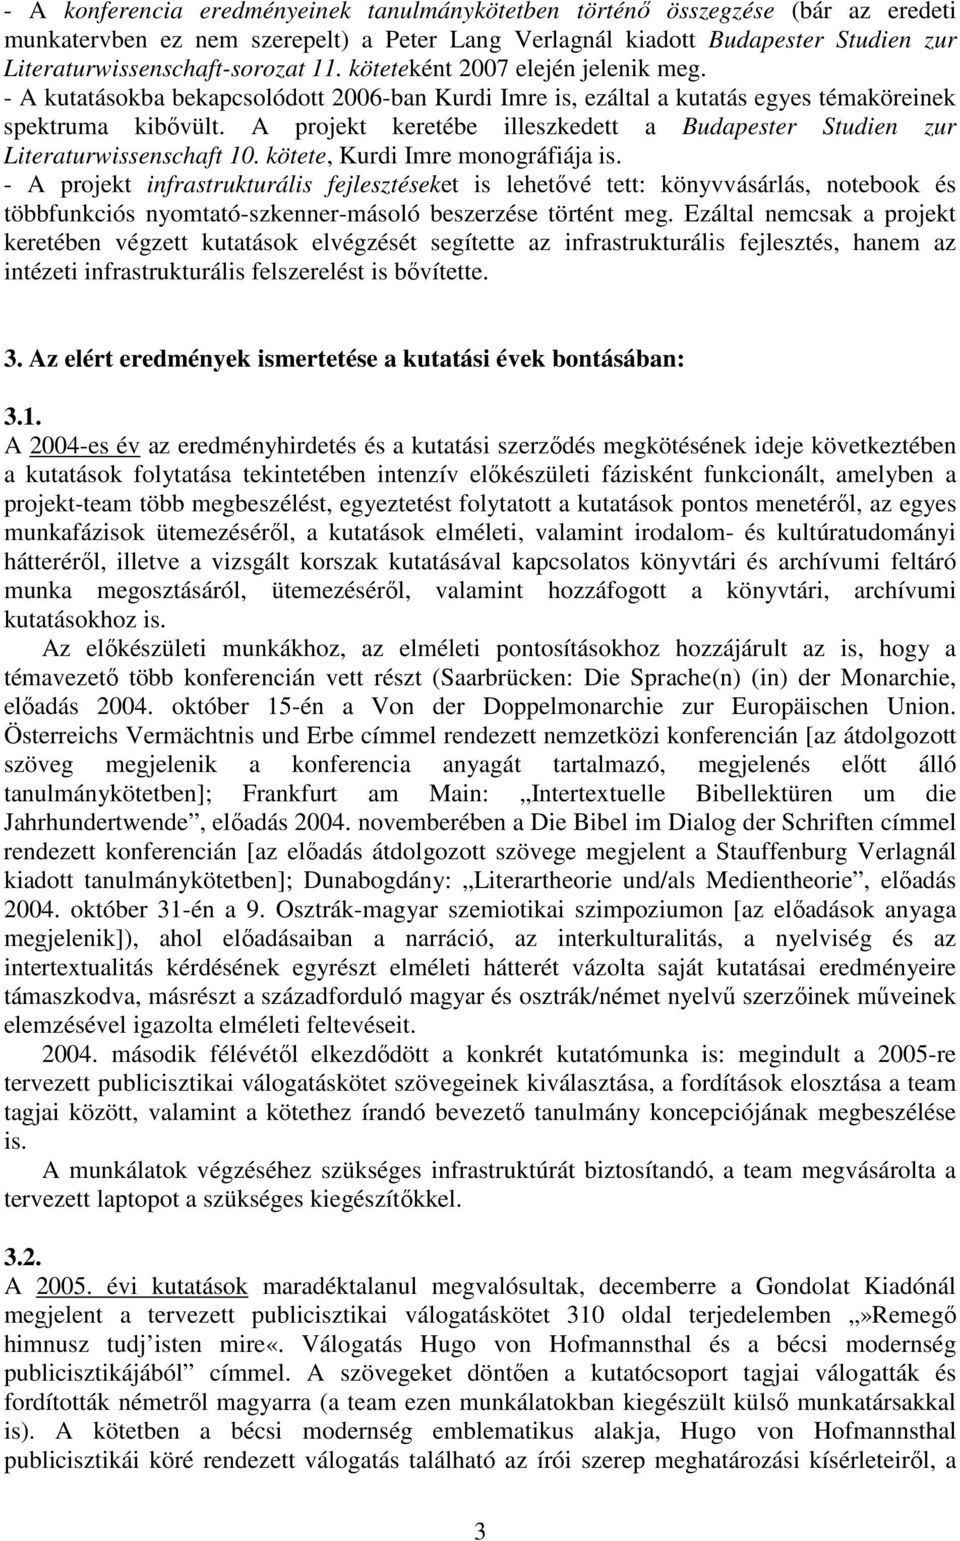 A projekt keretébe illeszkedett a Budapester Studien zur Literaturwissenschaft 10. kötete, Kurdi Imre monográfiája is.